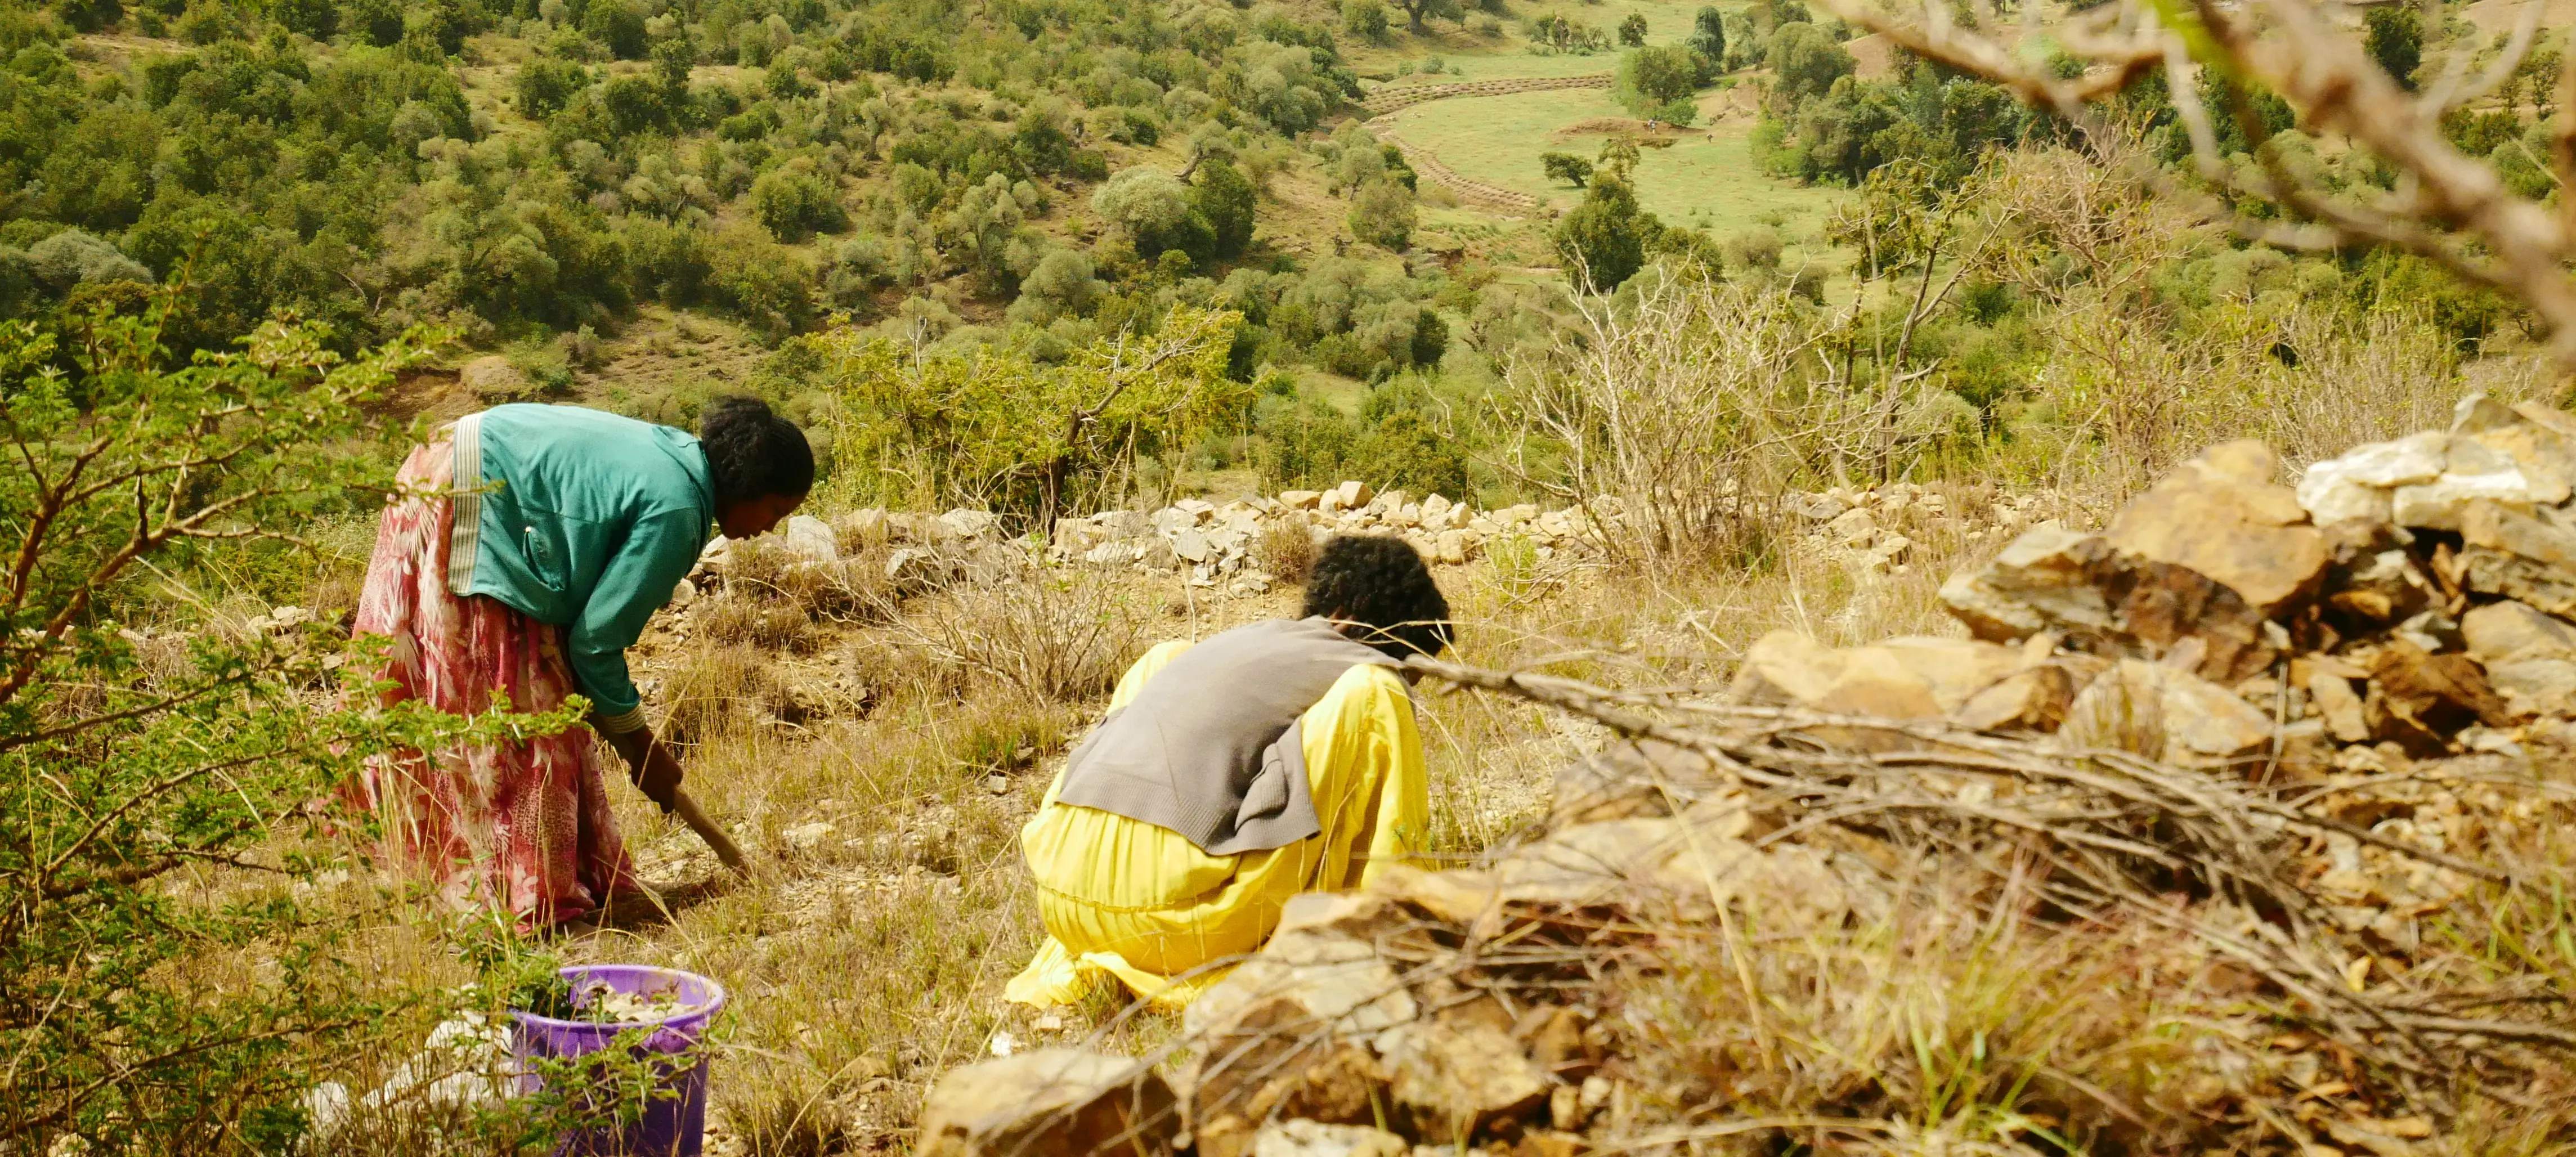 Field work in Desa'a landscape